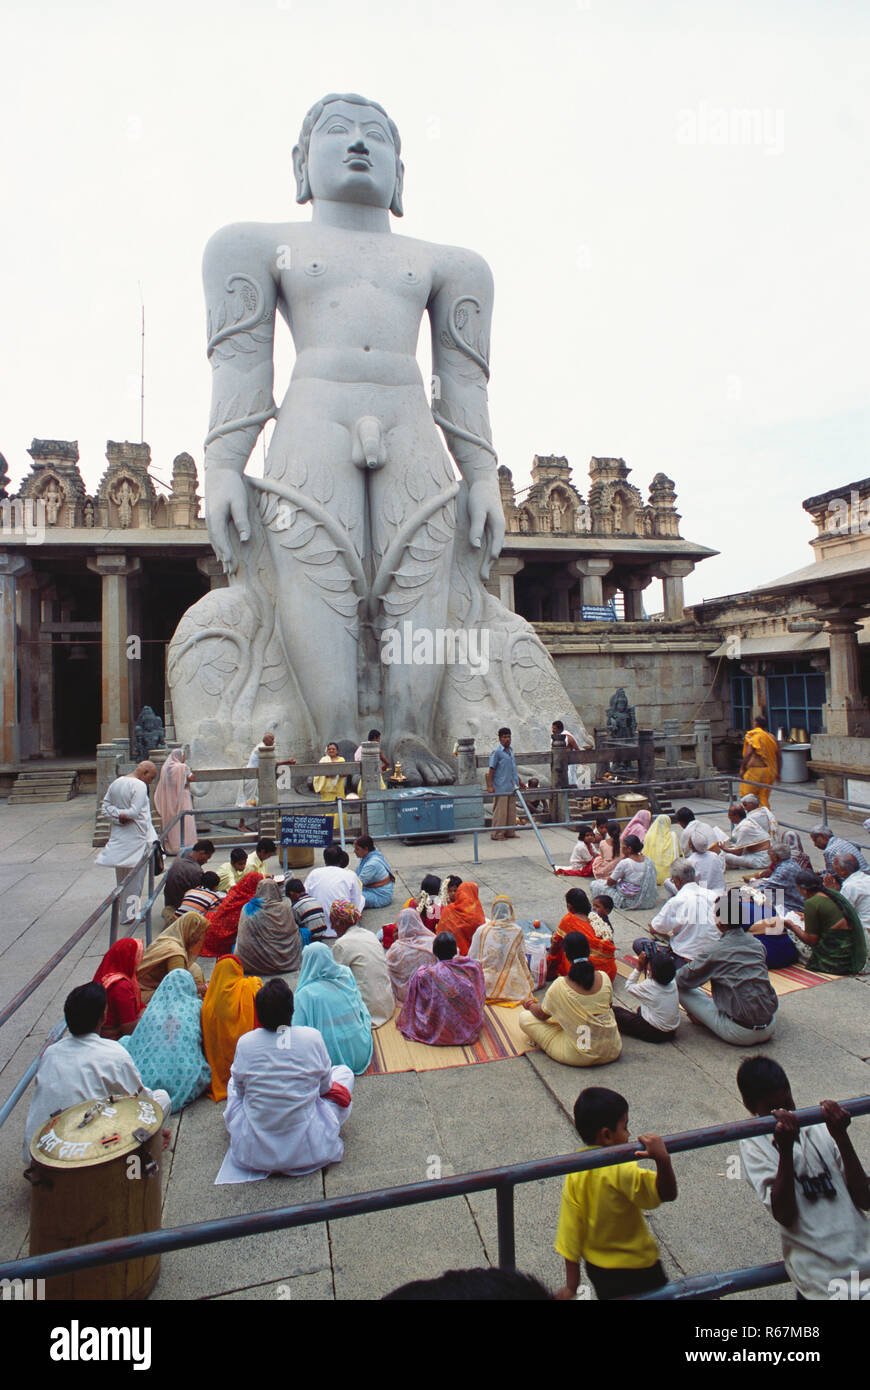 Jain dévots priant à 58,8 pieds de statue de saint Gomateshwara Lord Bahubali dans Mahamastakabhisheka sur Vindhyagiri, Shravanbelagola, Karnataka, Inde Banque D'Images